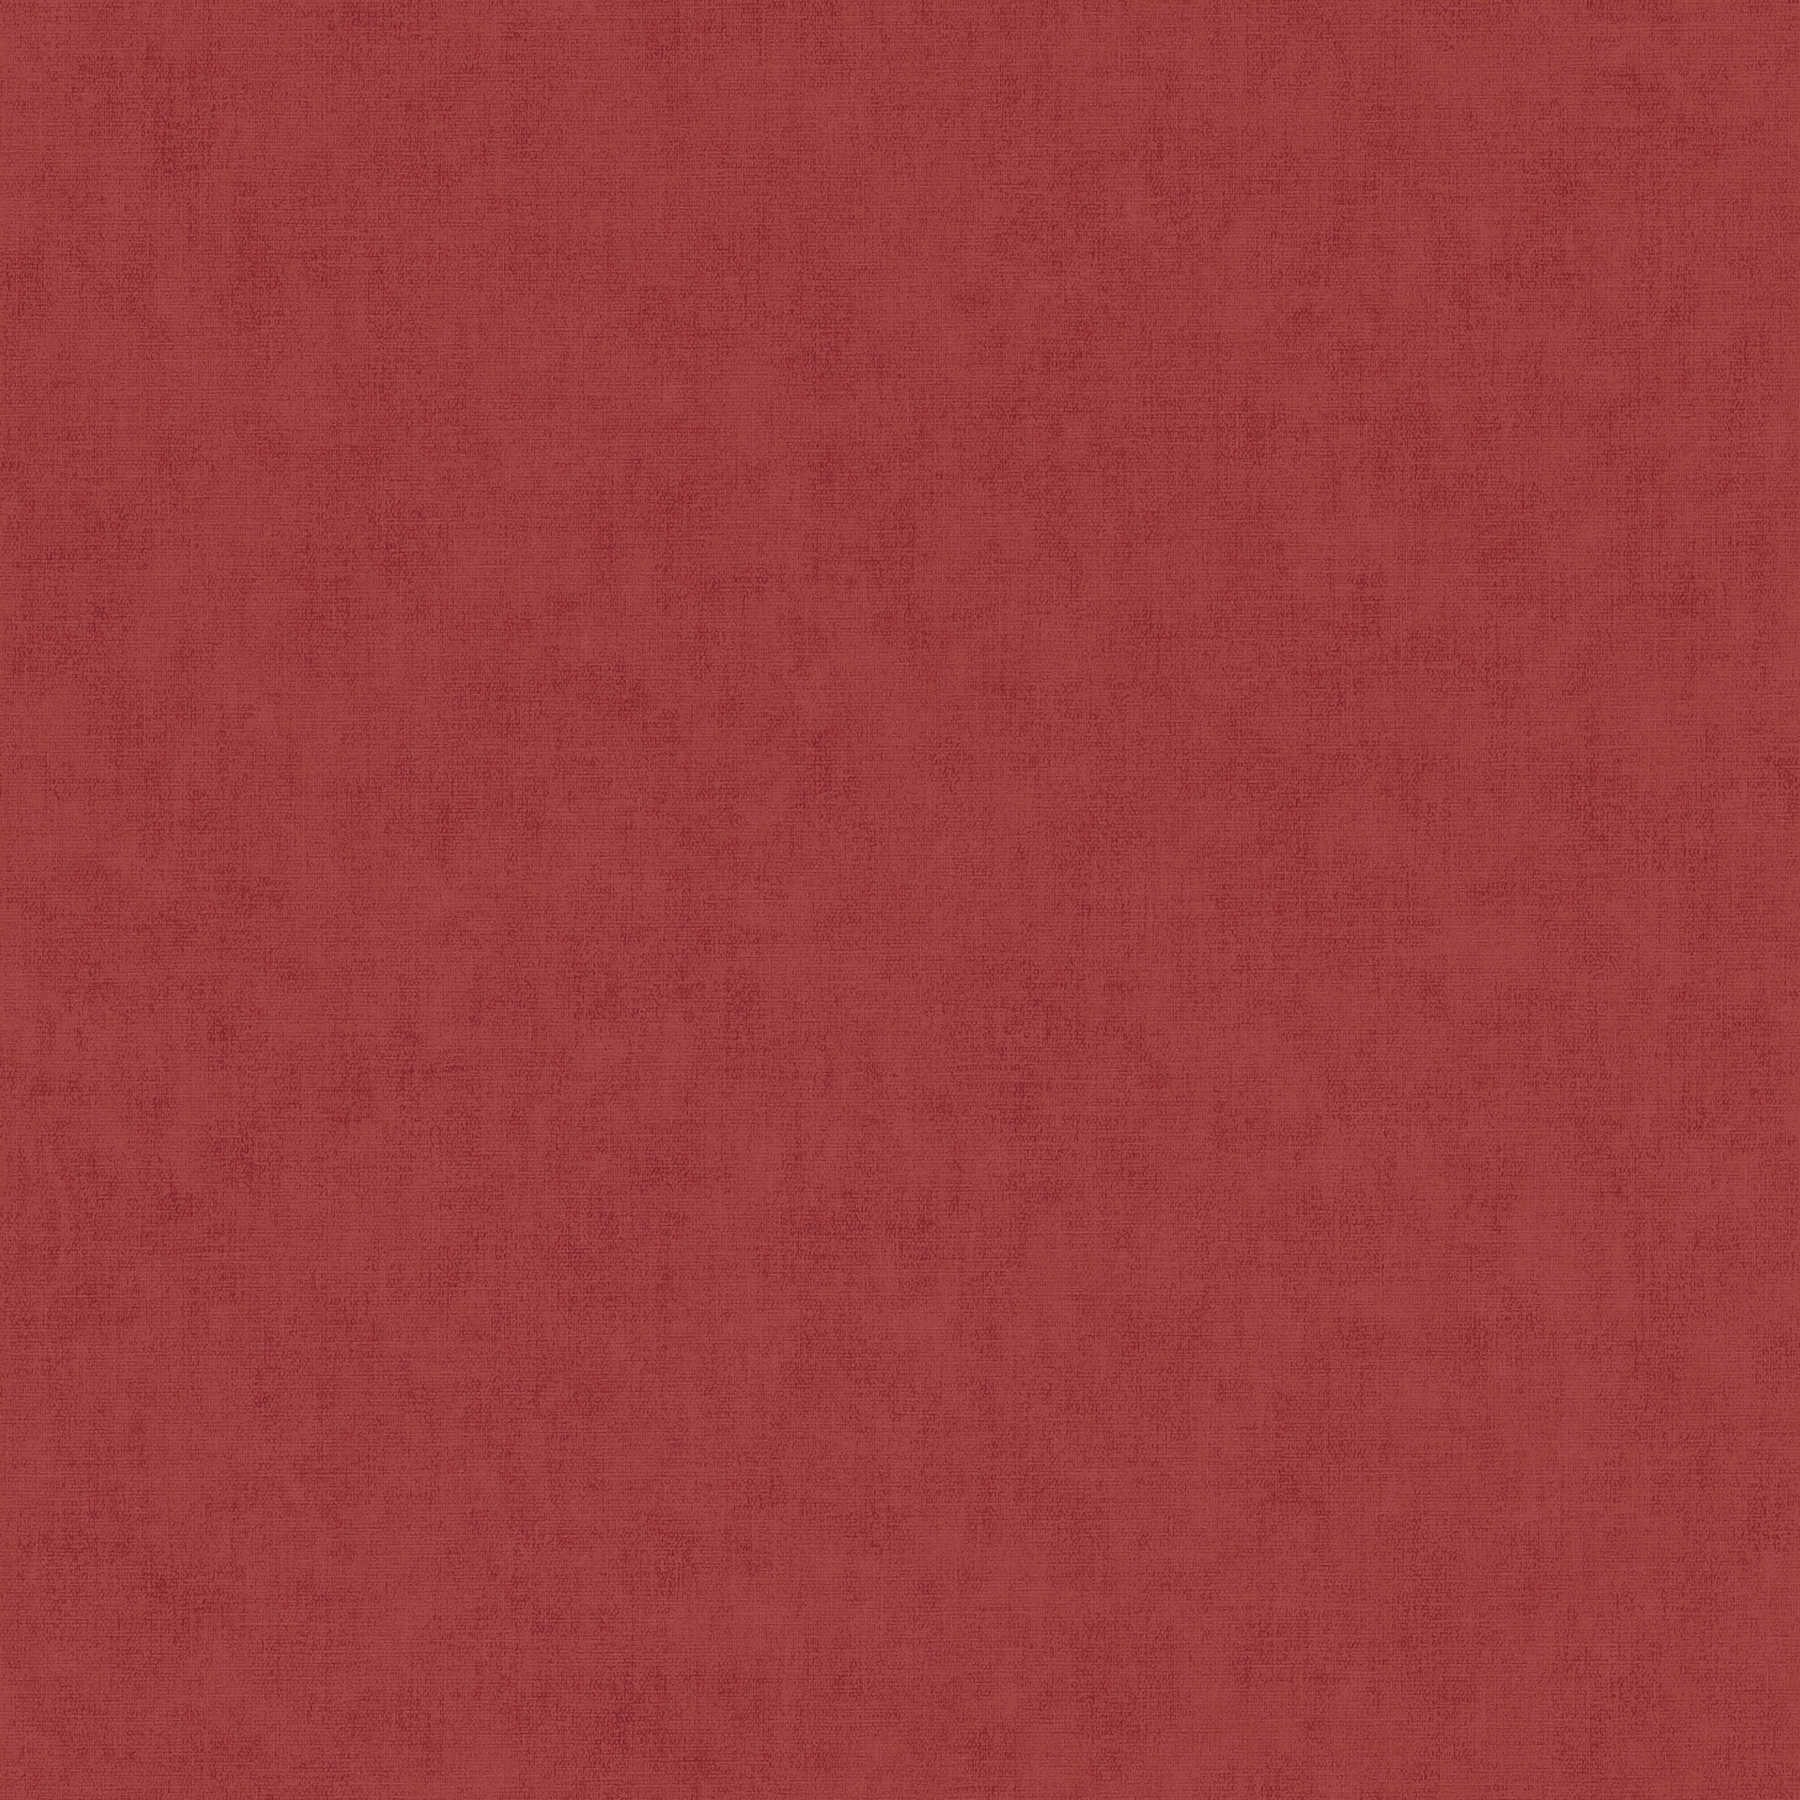 Leinenoptik Vliestapete mit dezentem Muster - Rot
